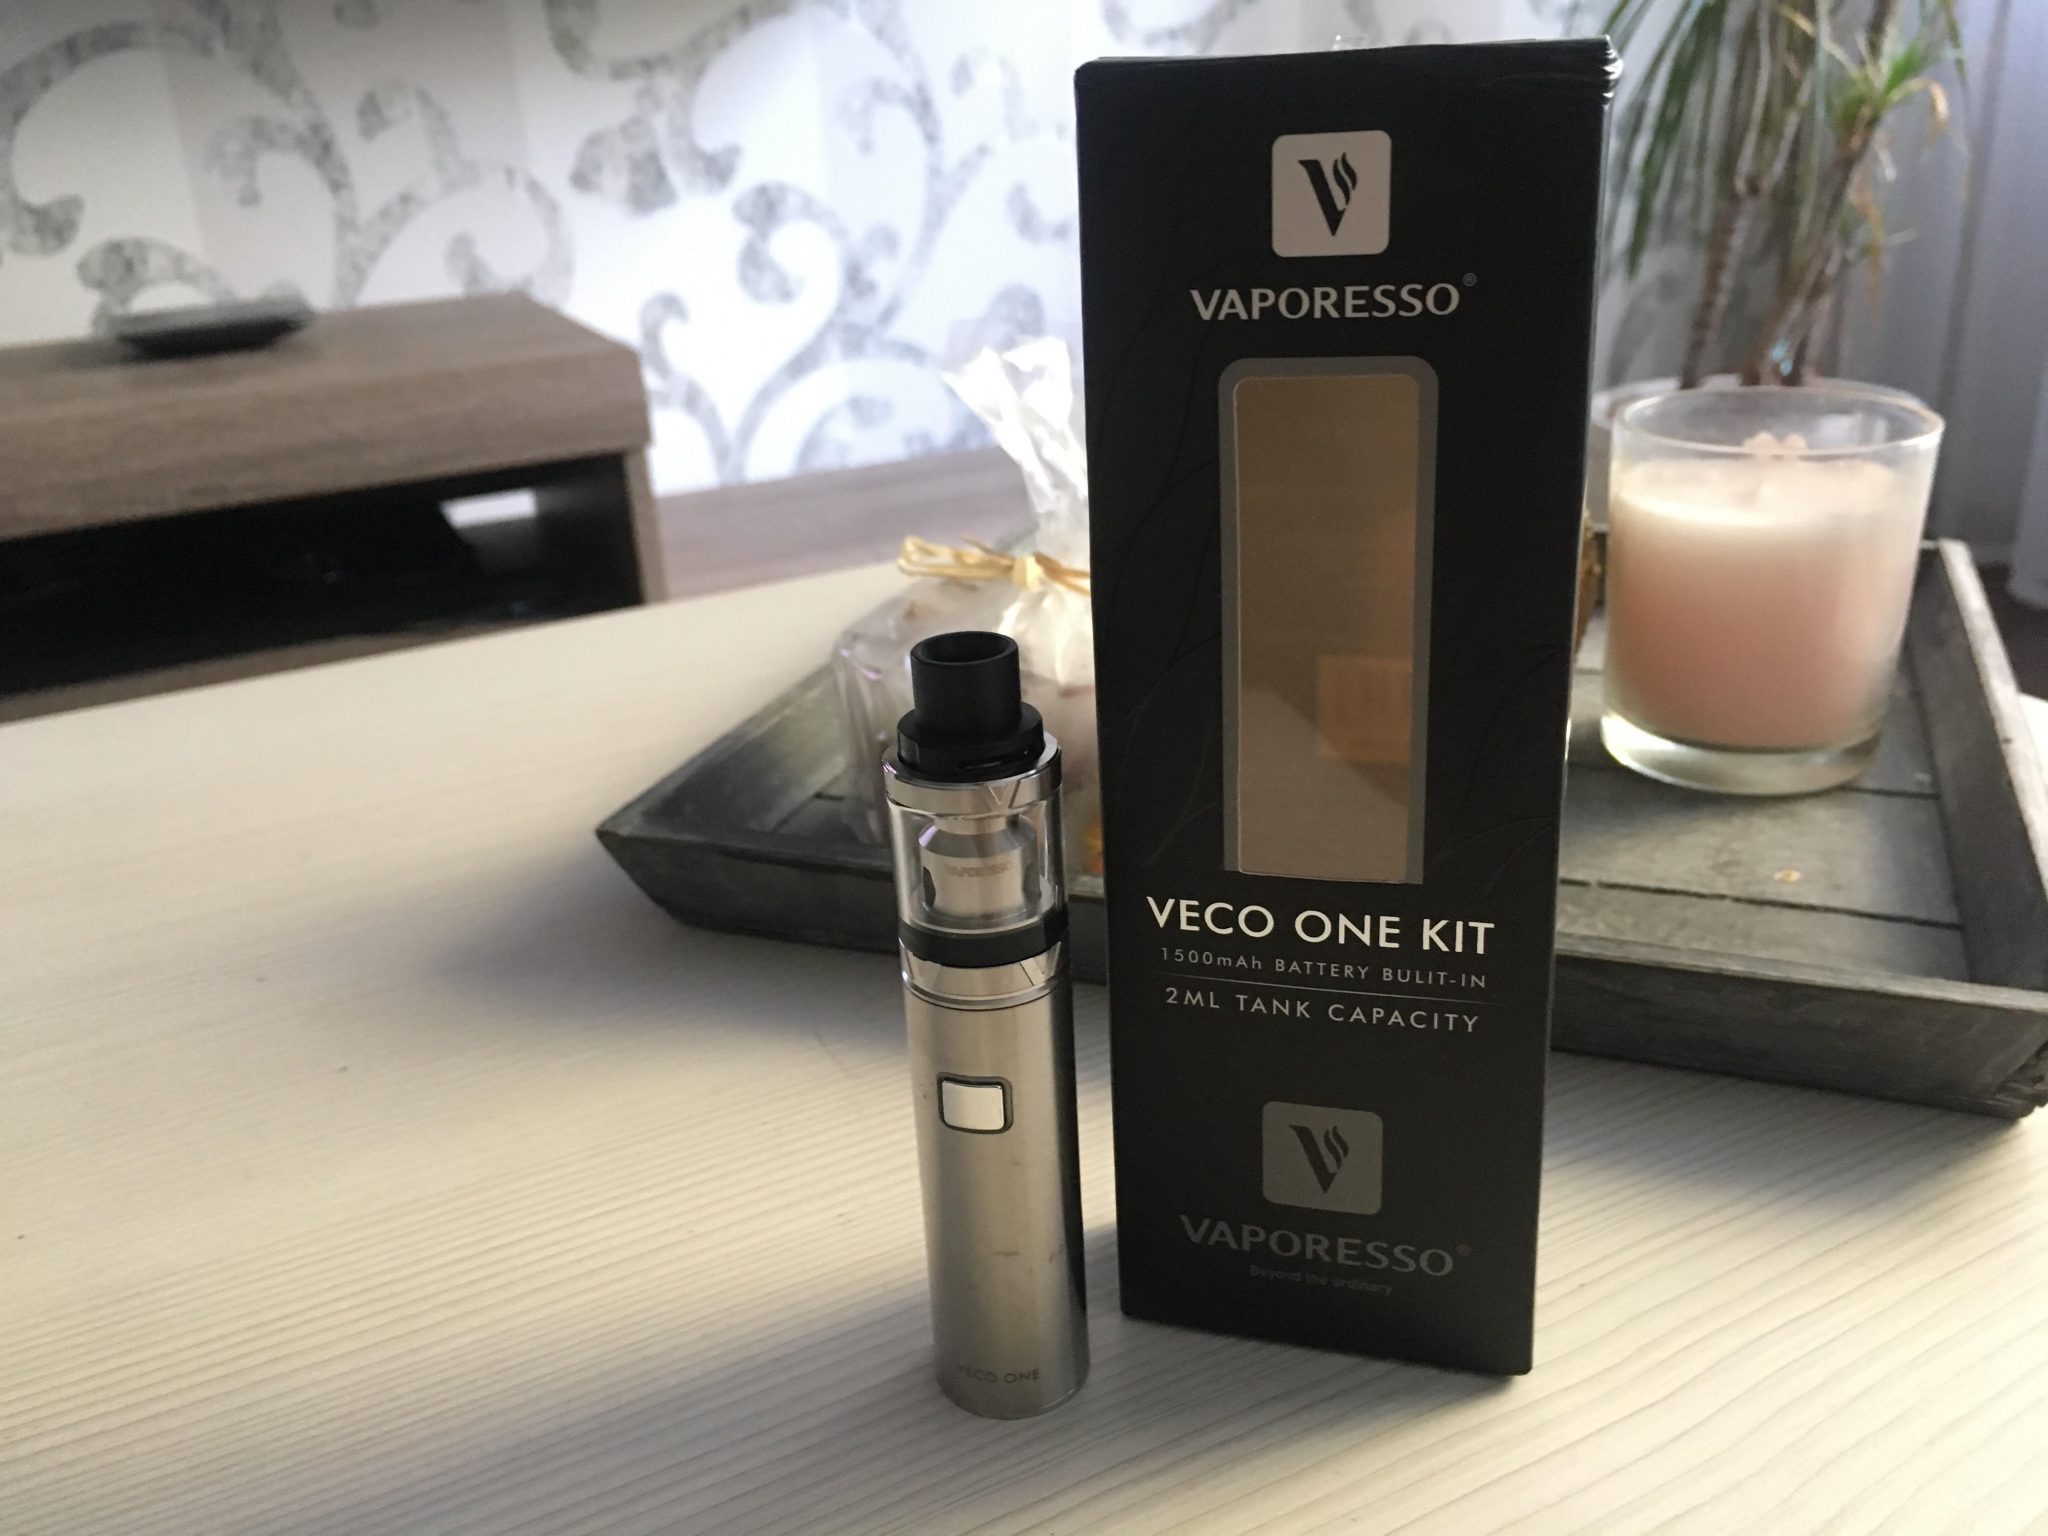 Vaporesso Veco One Kit Review